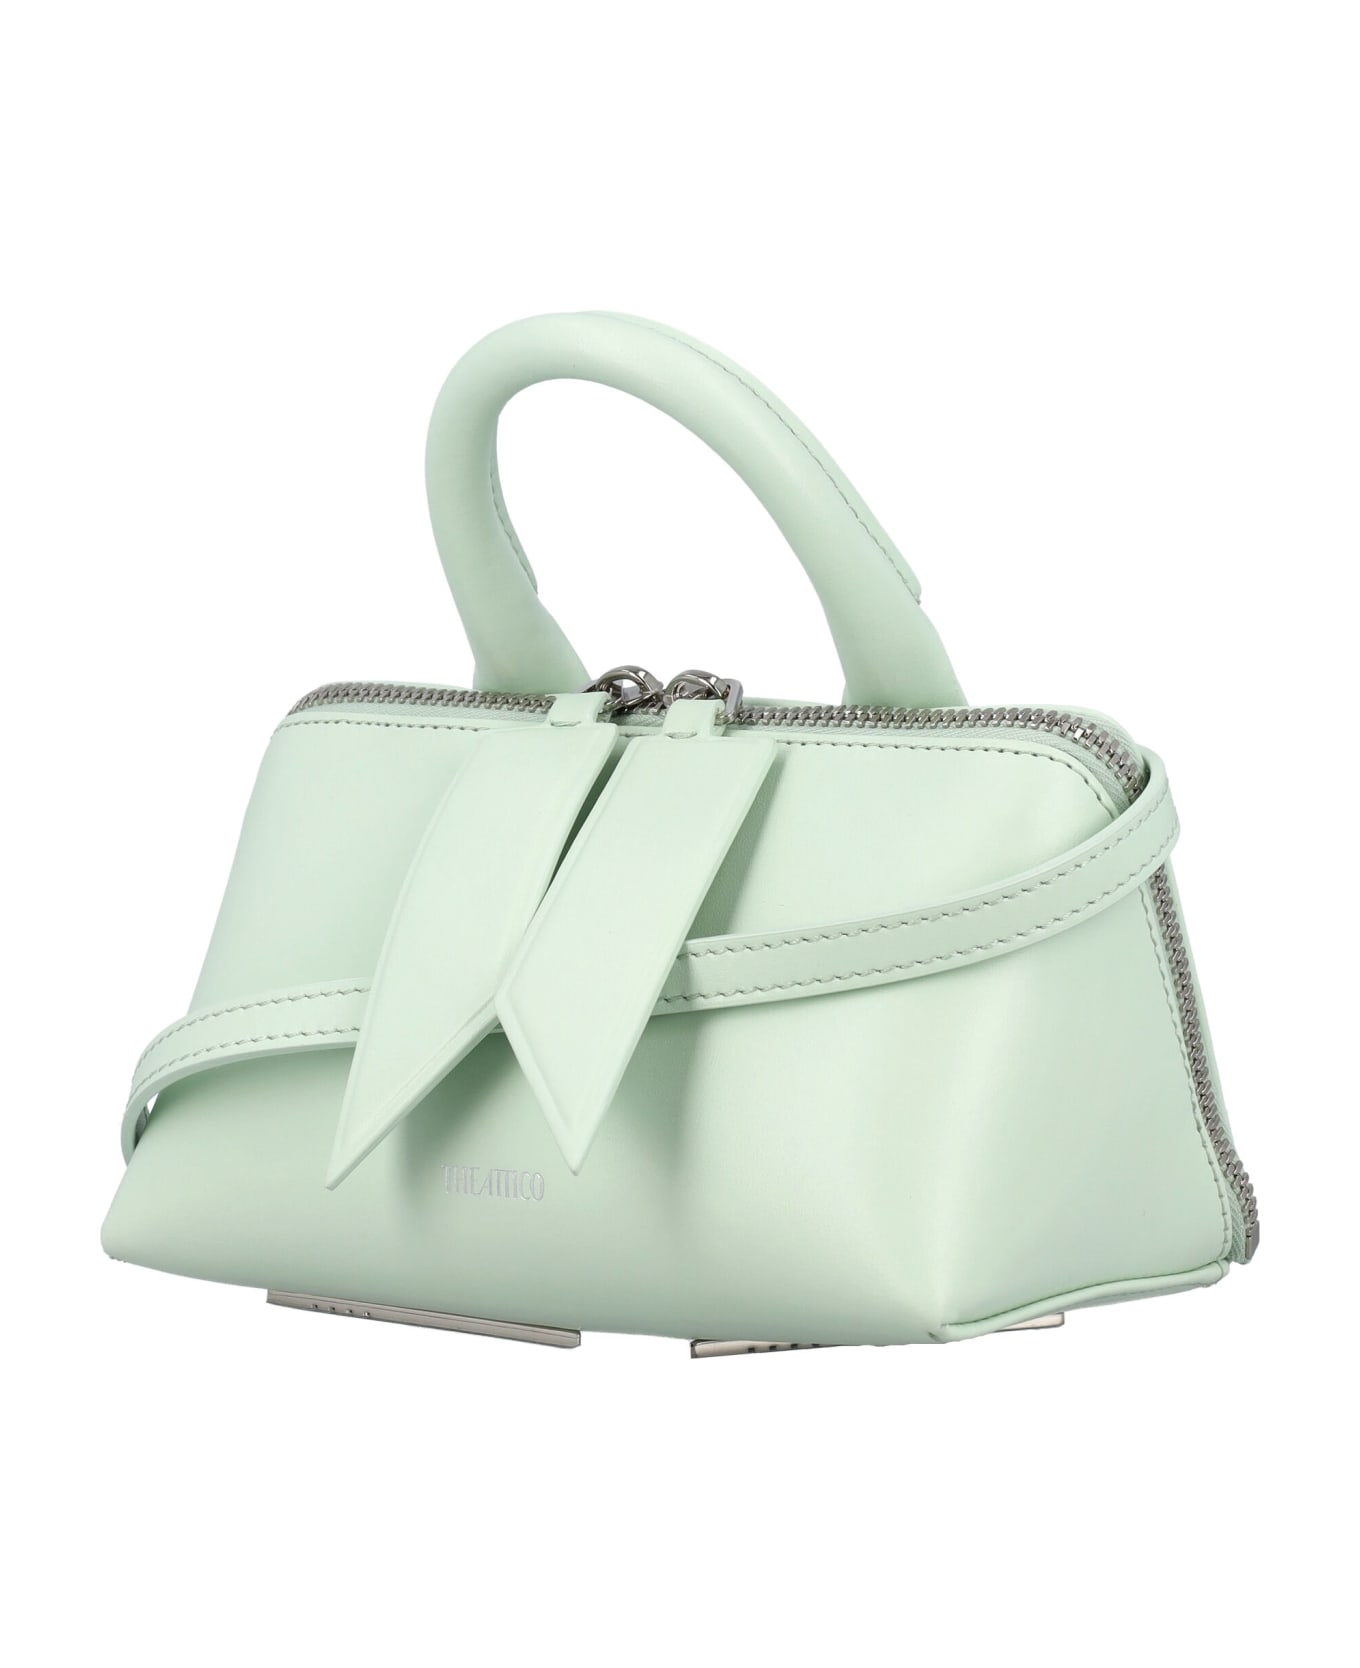 The Attico Friday Mini Handbag - ACQUAMARINA